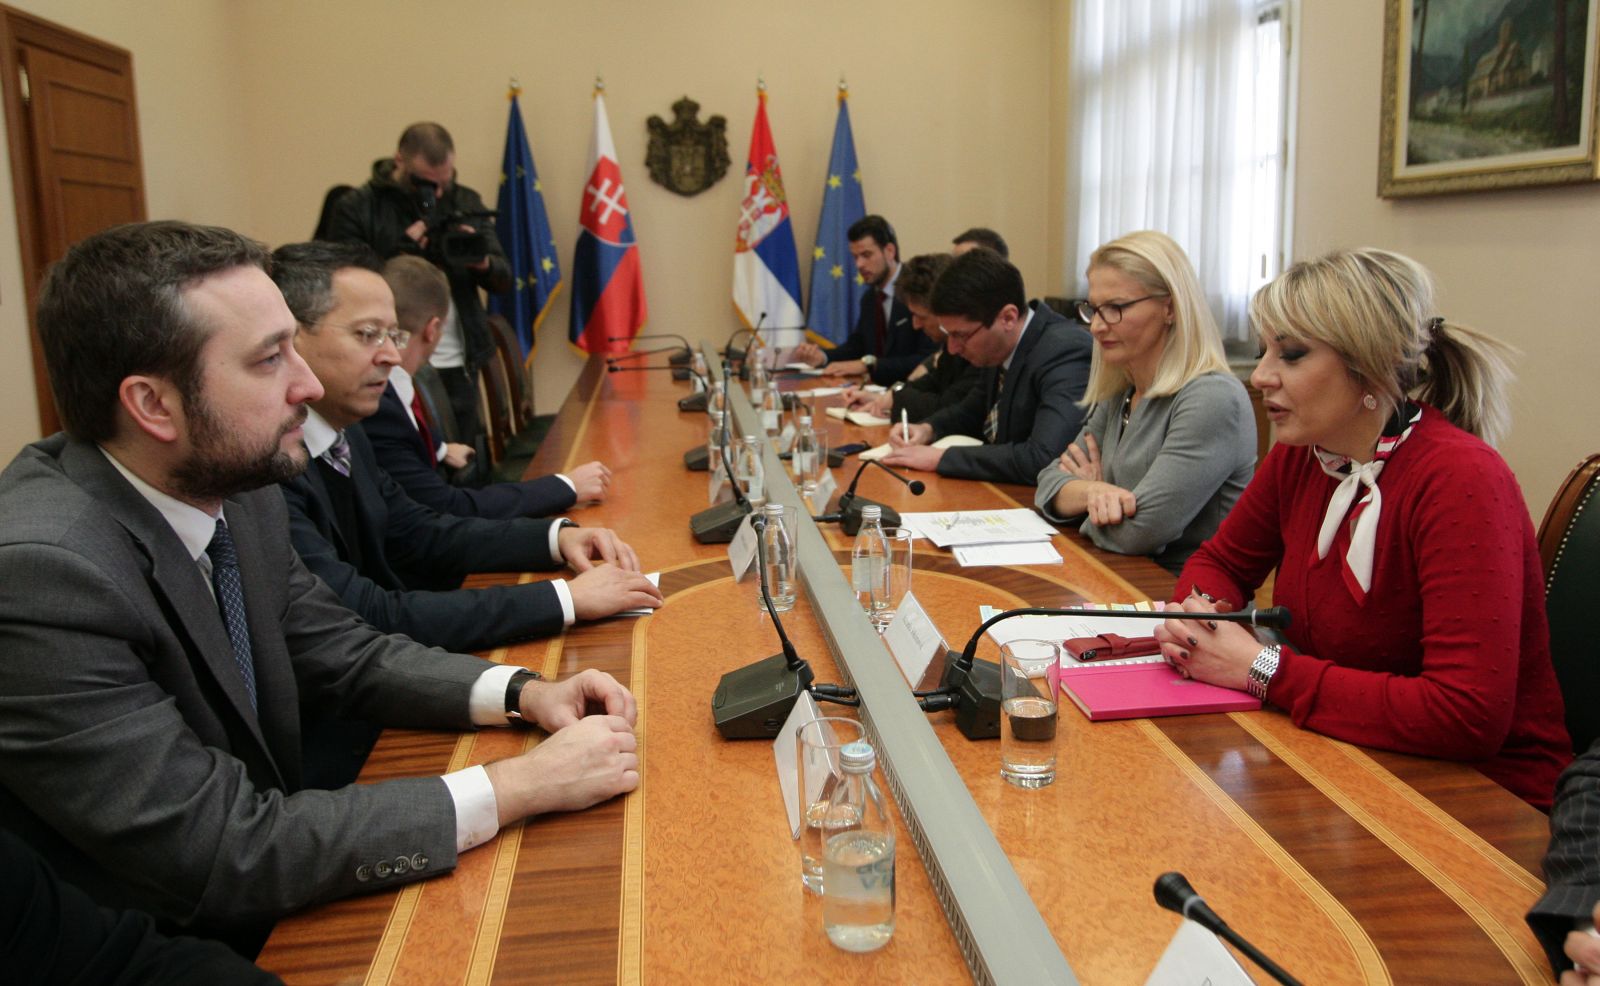 J. Joksimović and Slovak Parliament delegation: Full support to Serbia’s European path